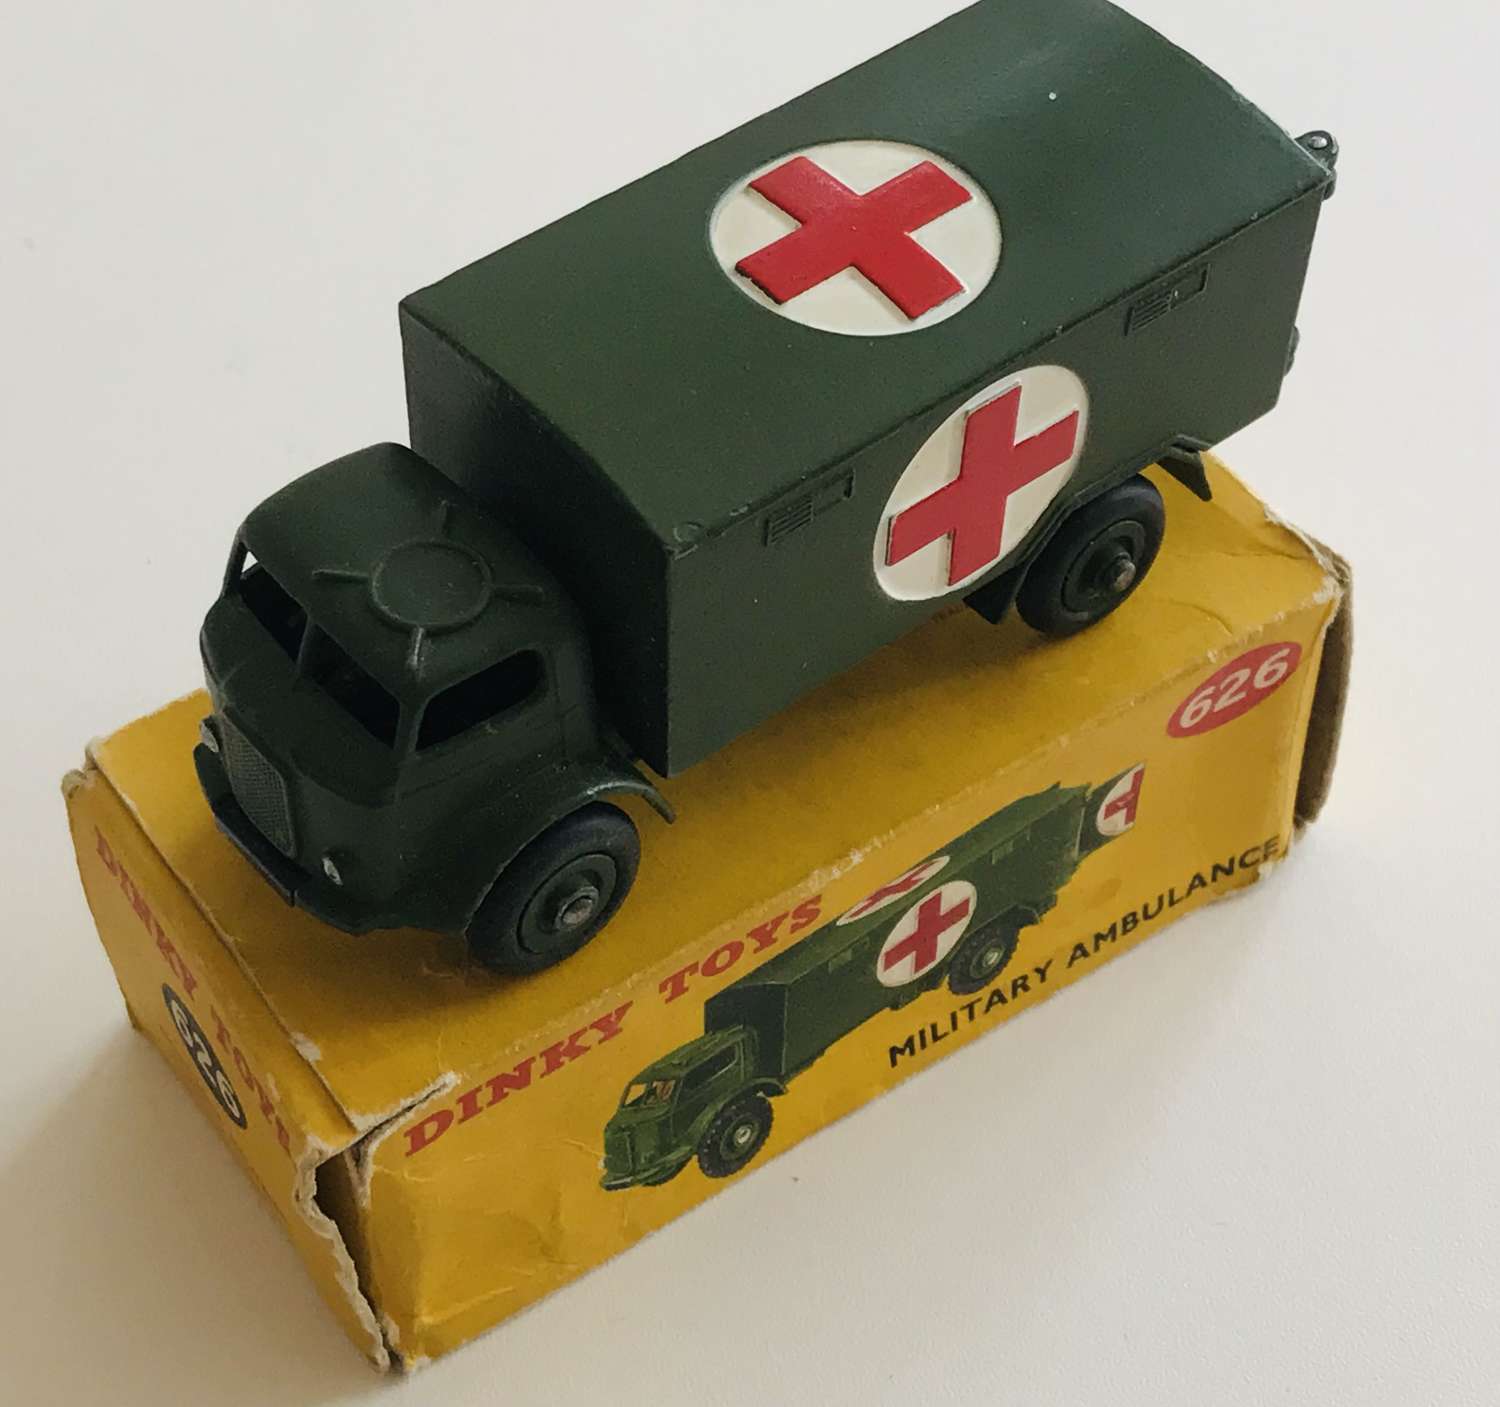 Box dingy military ambulance